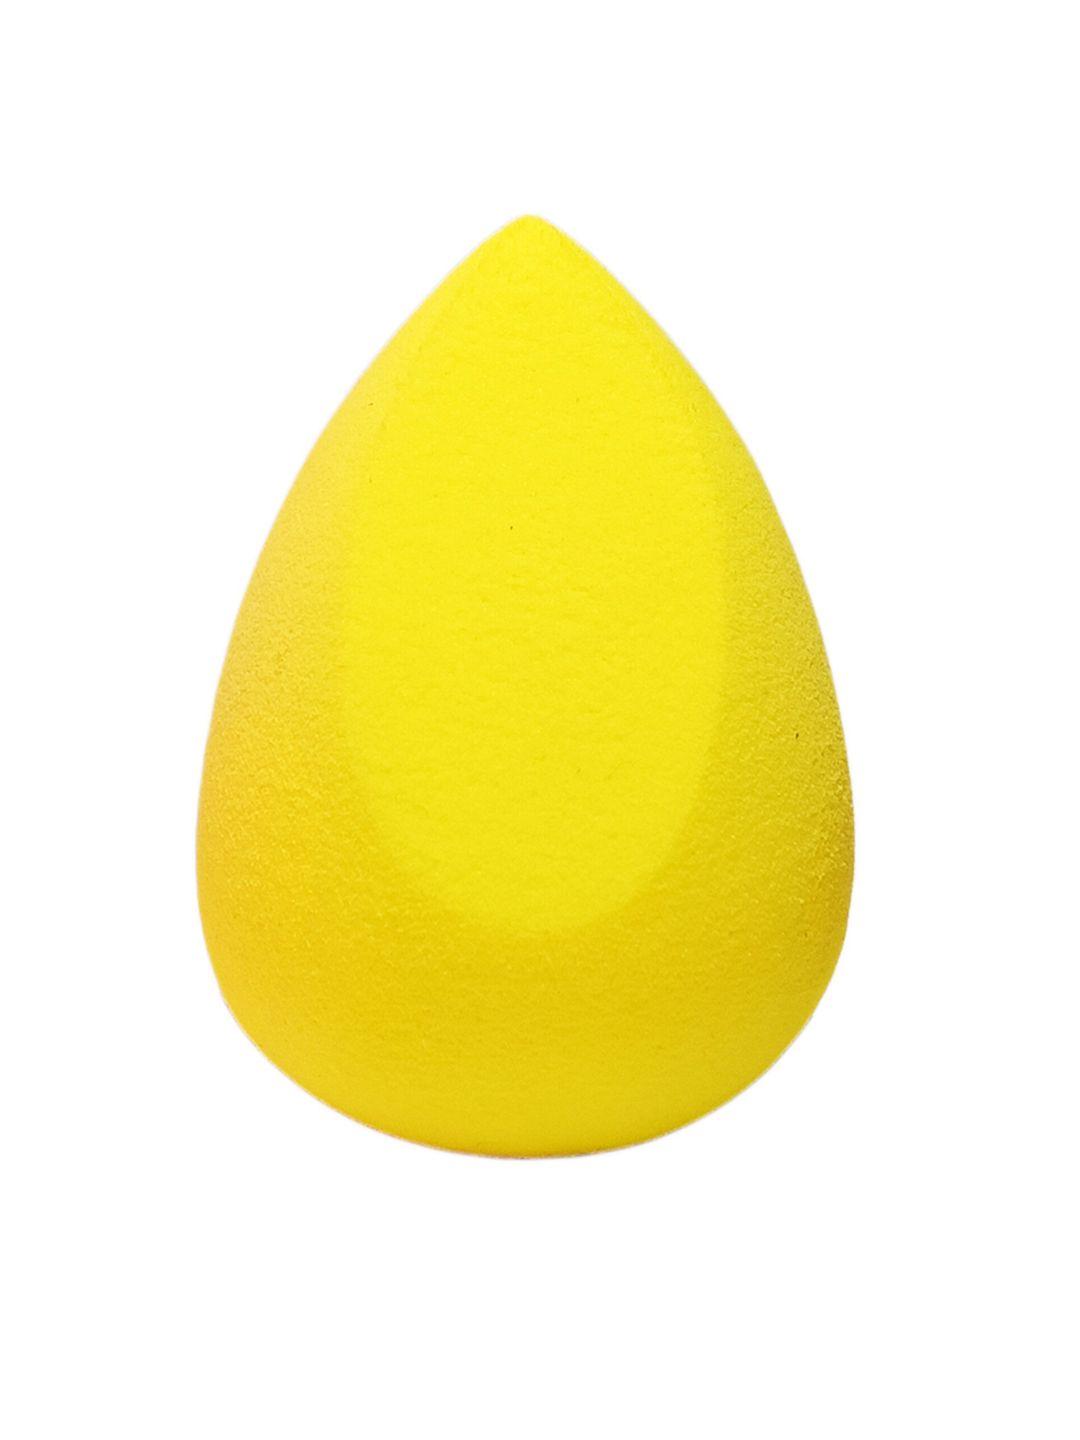 allure yellow blender makeup sponge